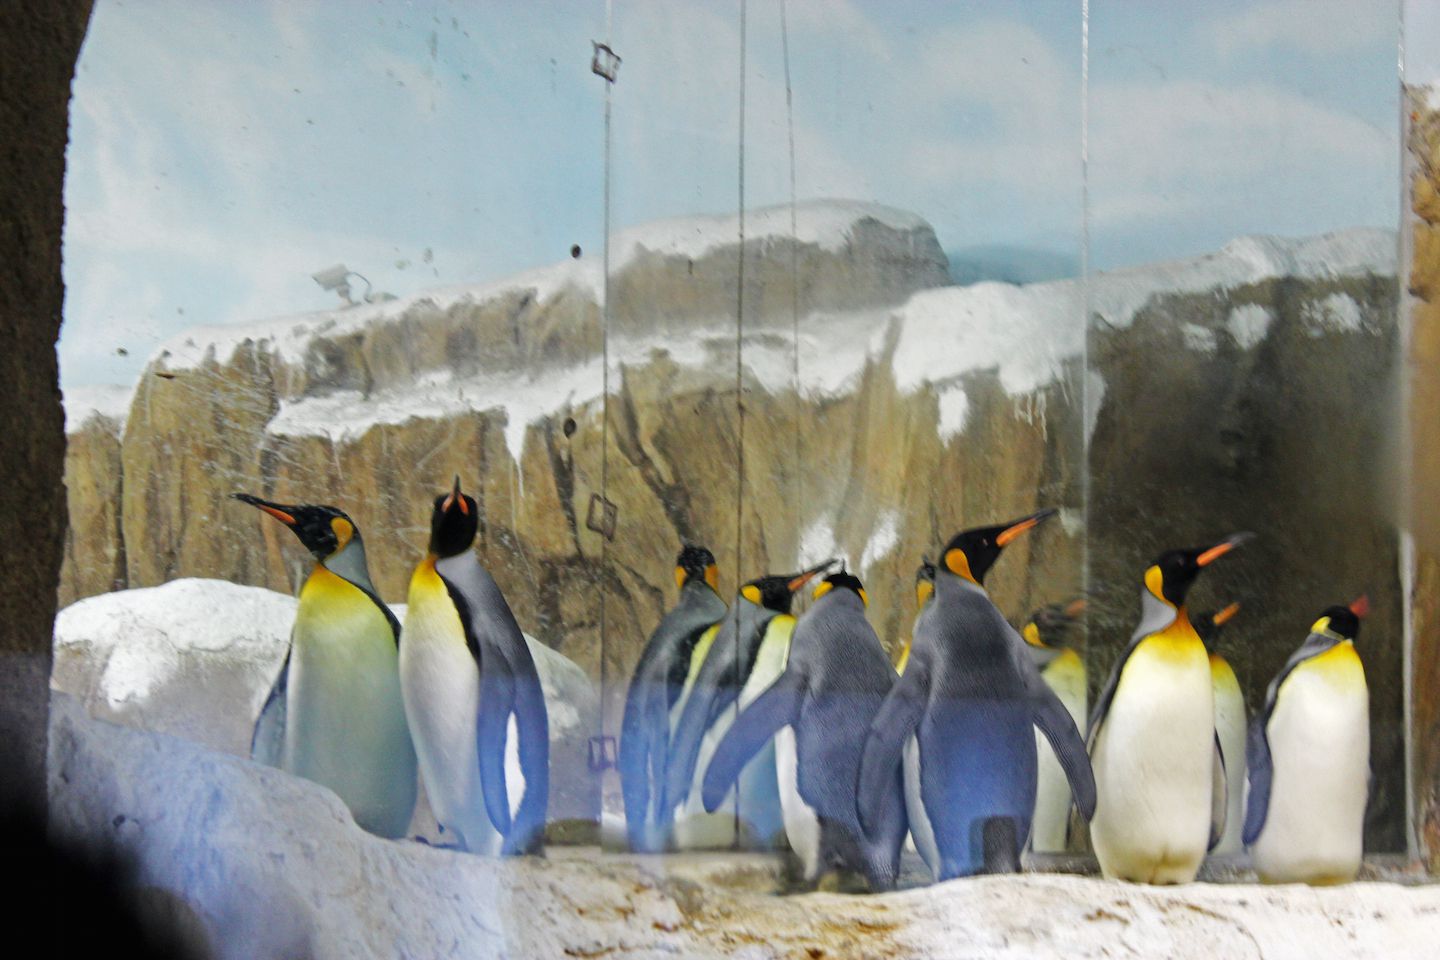 King penguins at the Taipei Zoo, Taiwan